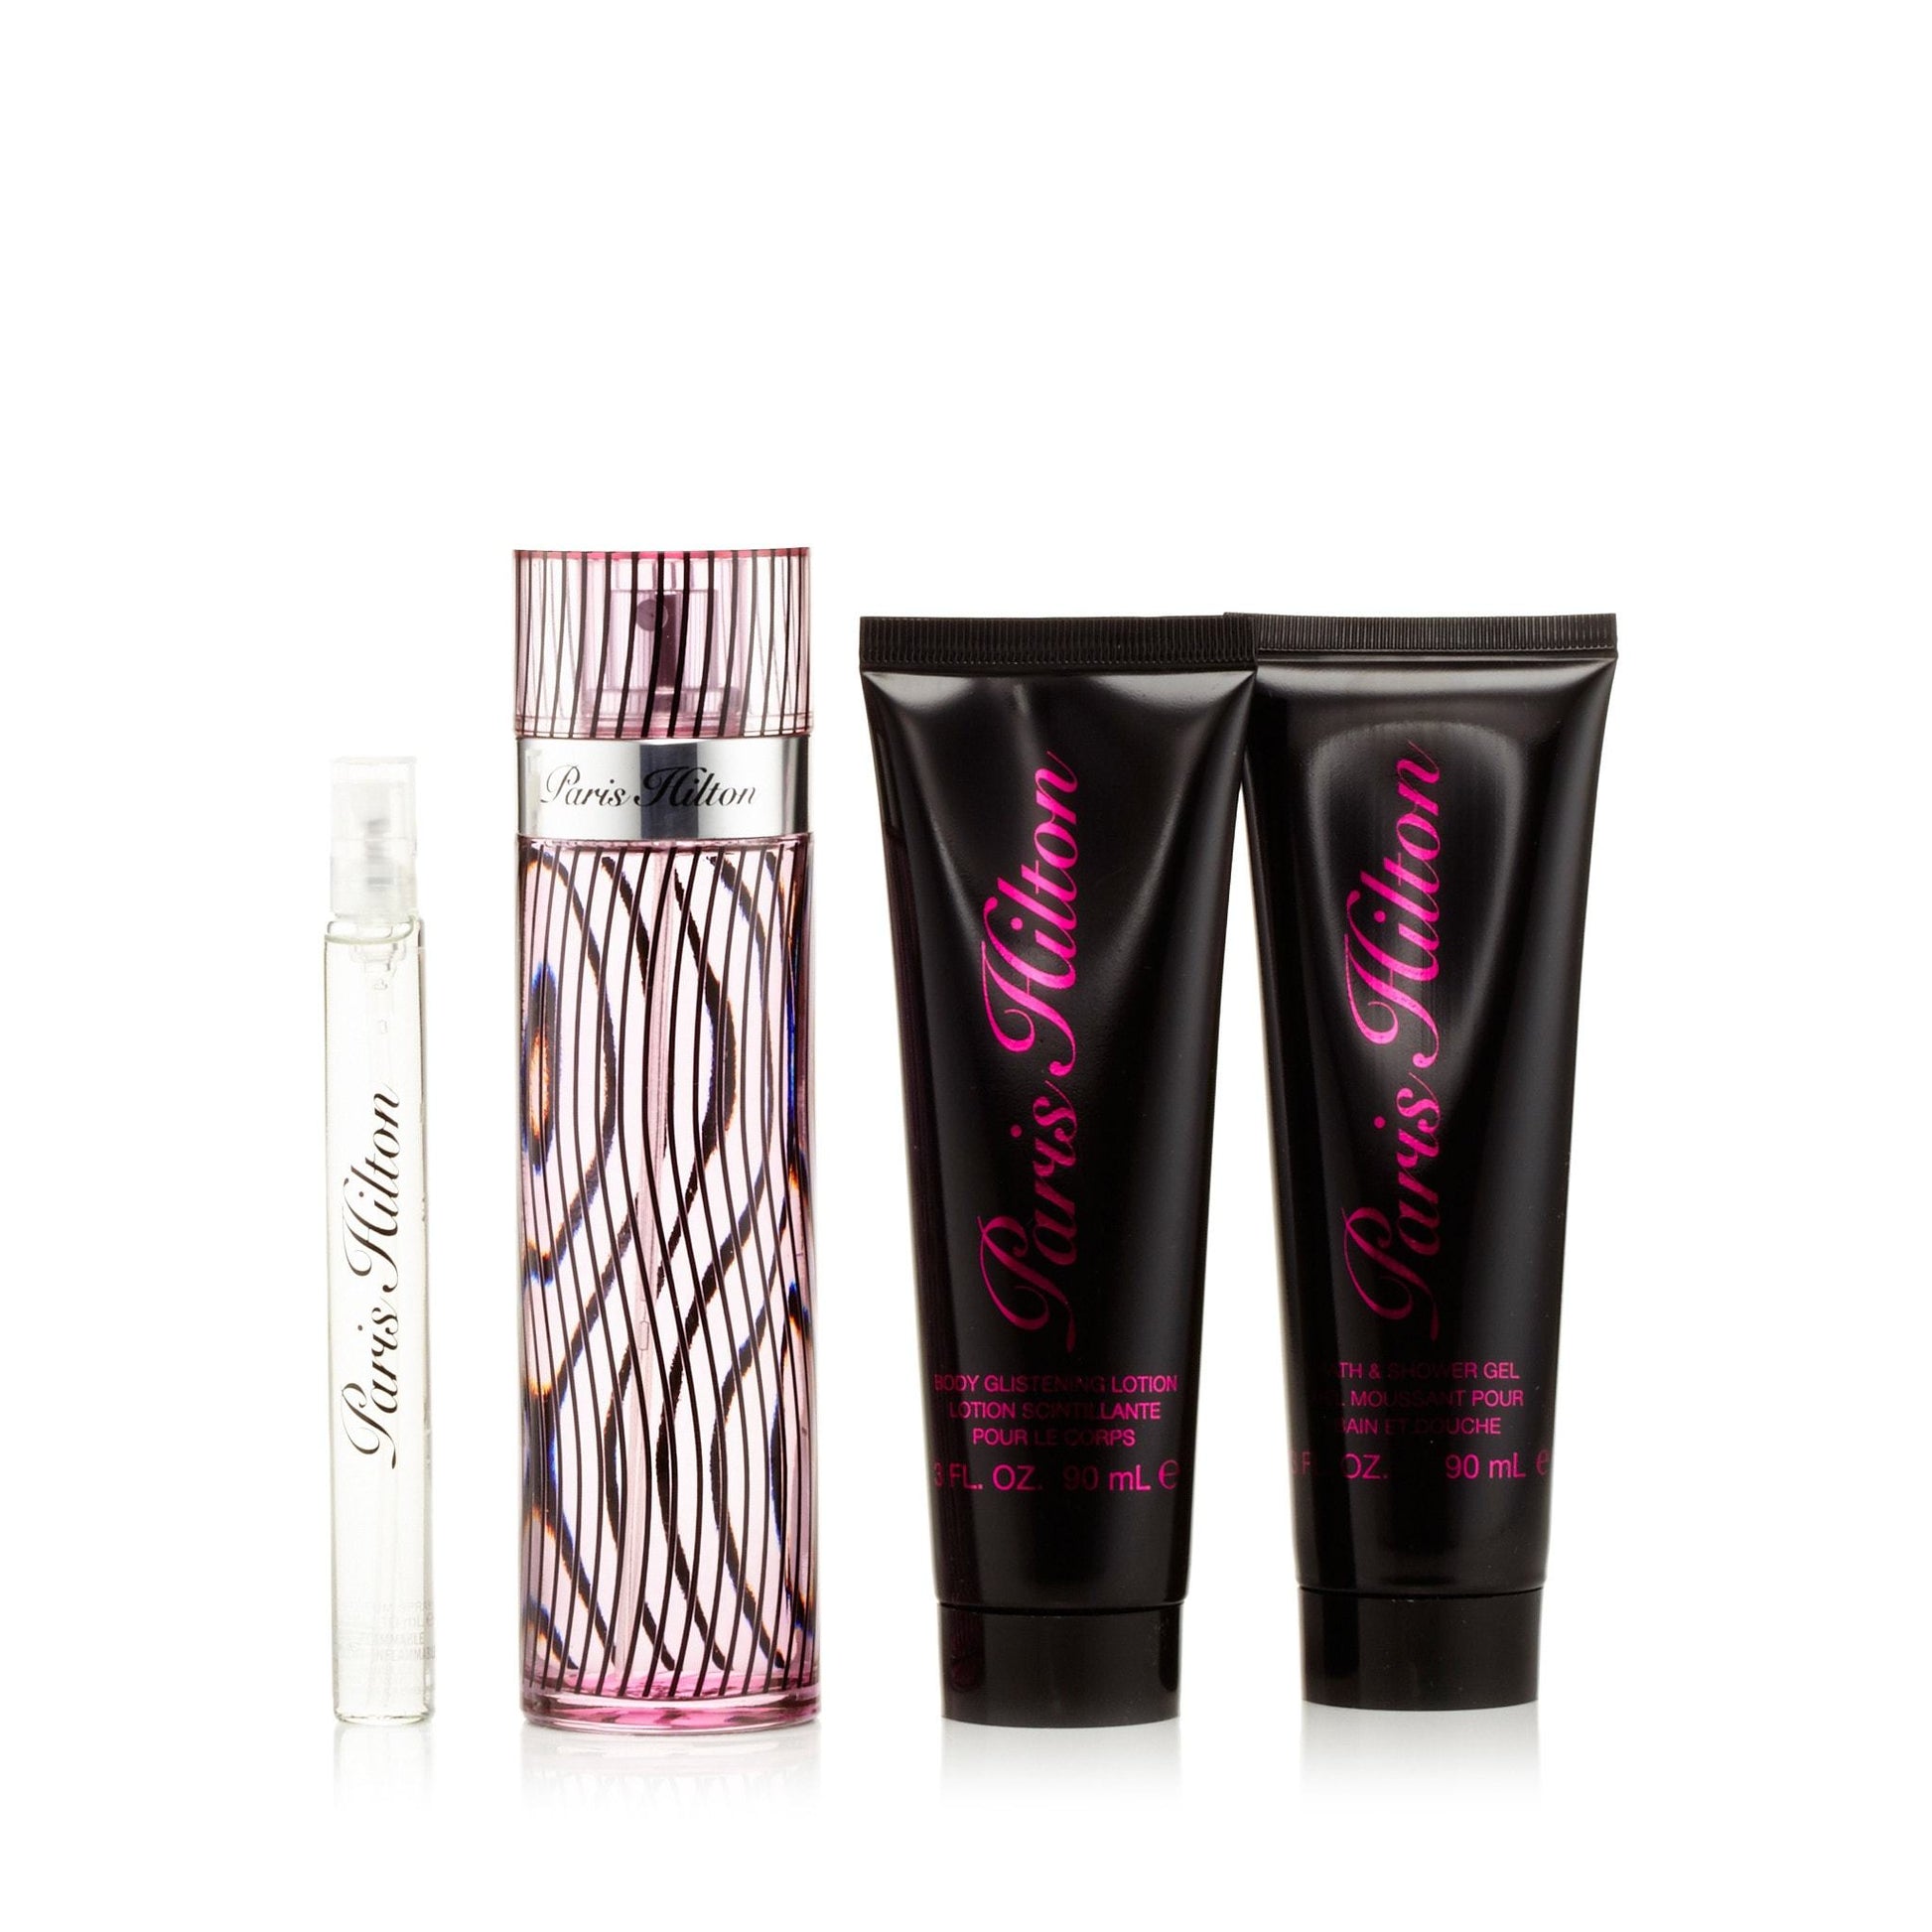 Paris Hilton Gift Set EDP Body Lotion and Shower Gel for Women by Paris Hilton, Product image 1